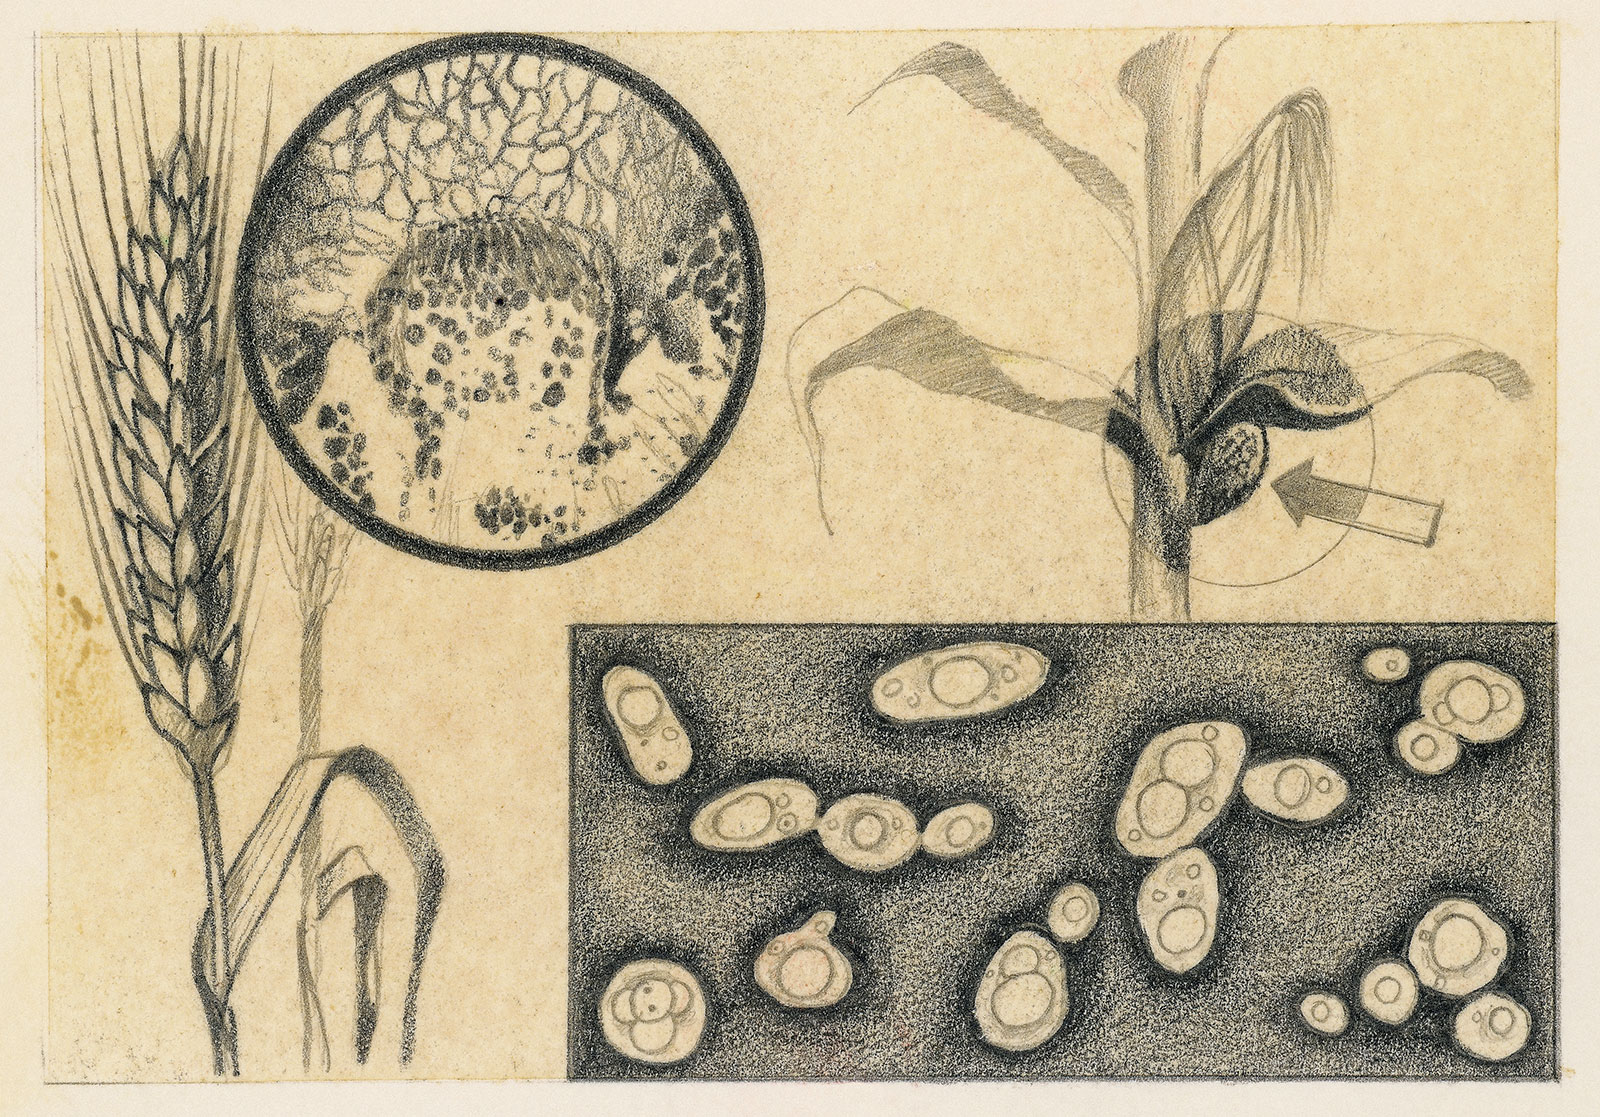 illustrations showing blight on corn